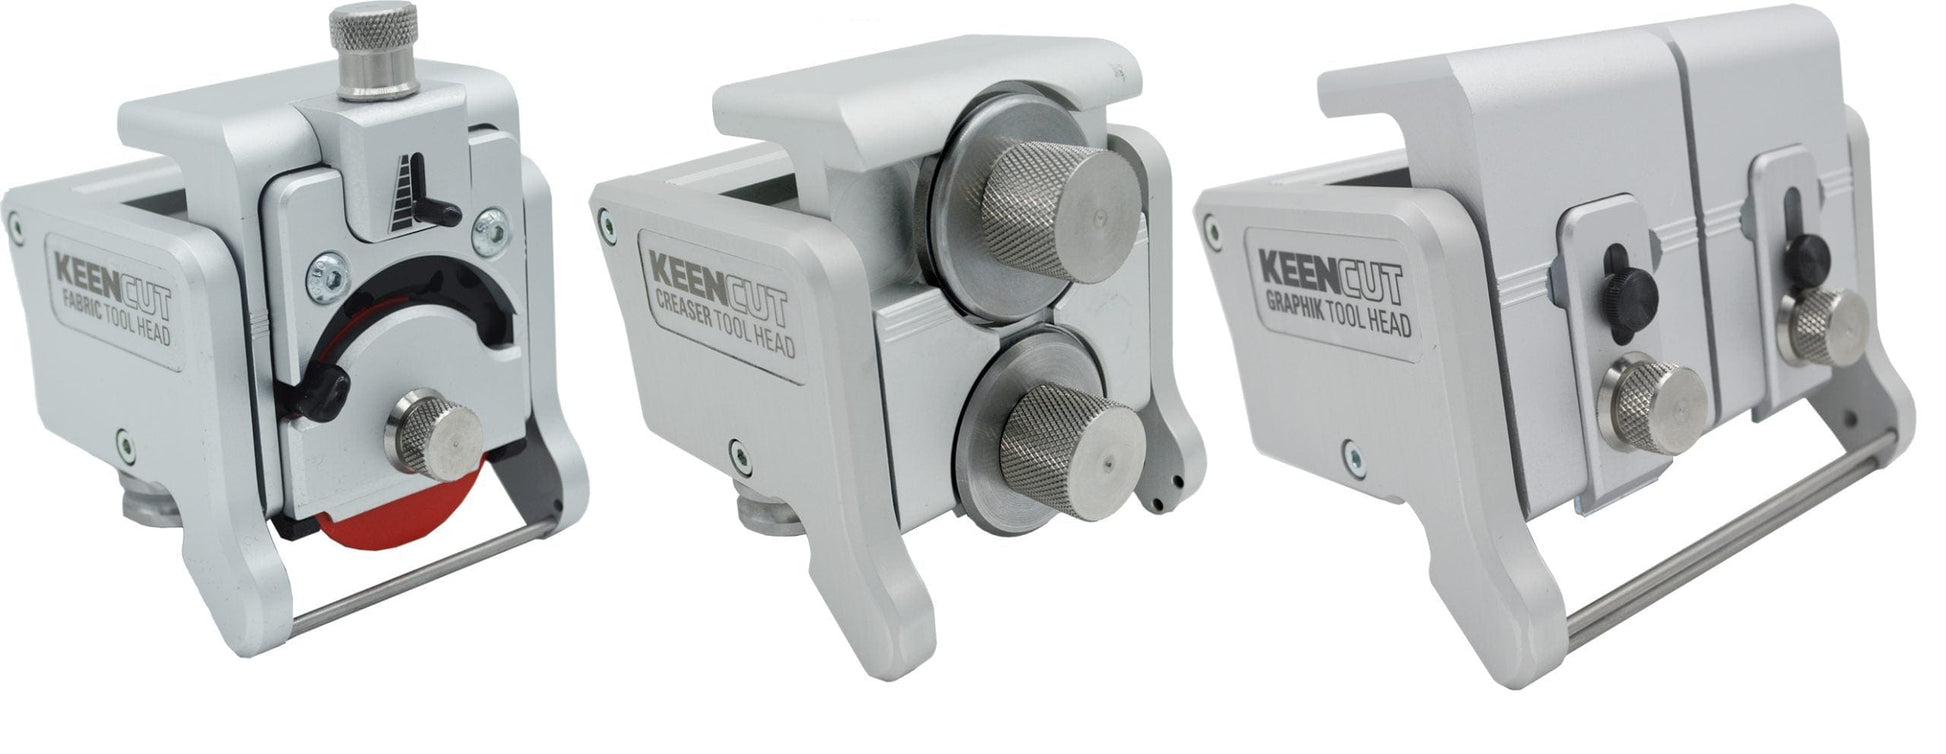 Keencut Cutters Bars Third Generation KeenCut Evolution3 Free Hand - 1100mm